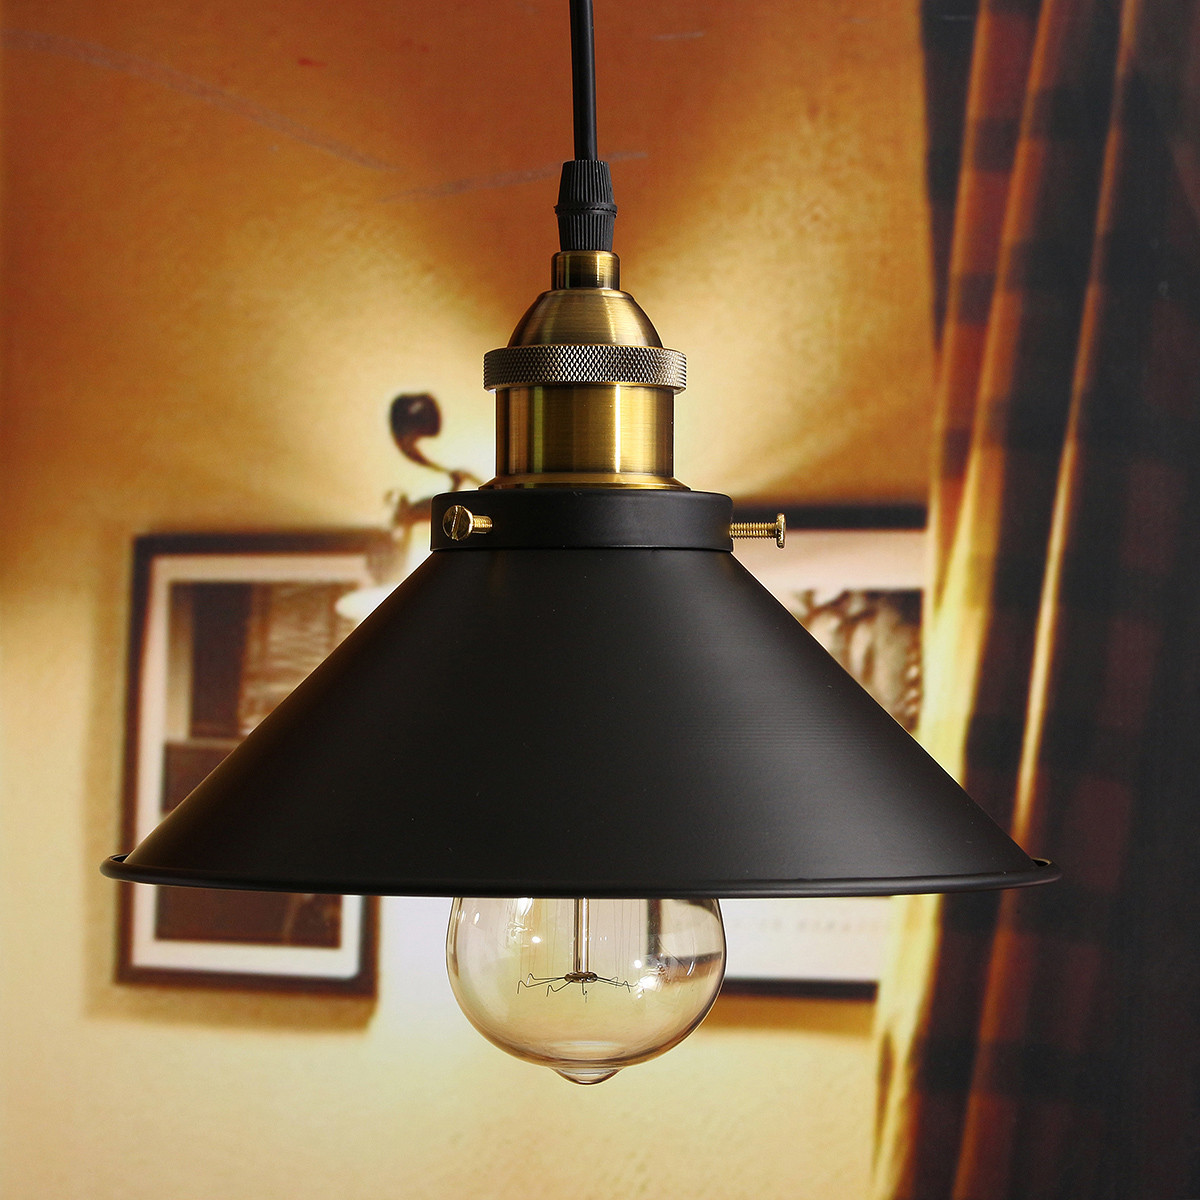 Industrial Bedroom Lighting
 Vintage Industrial Pendant Retro Loft Home Ceiling Light